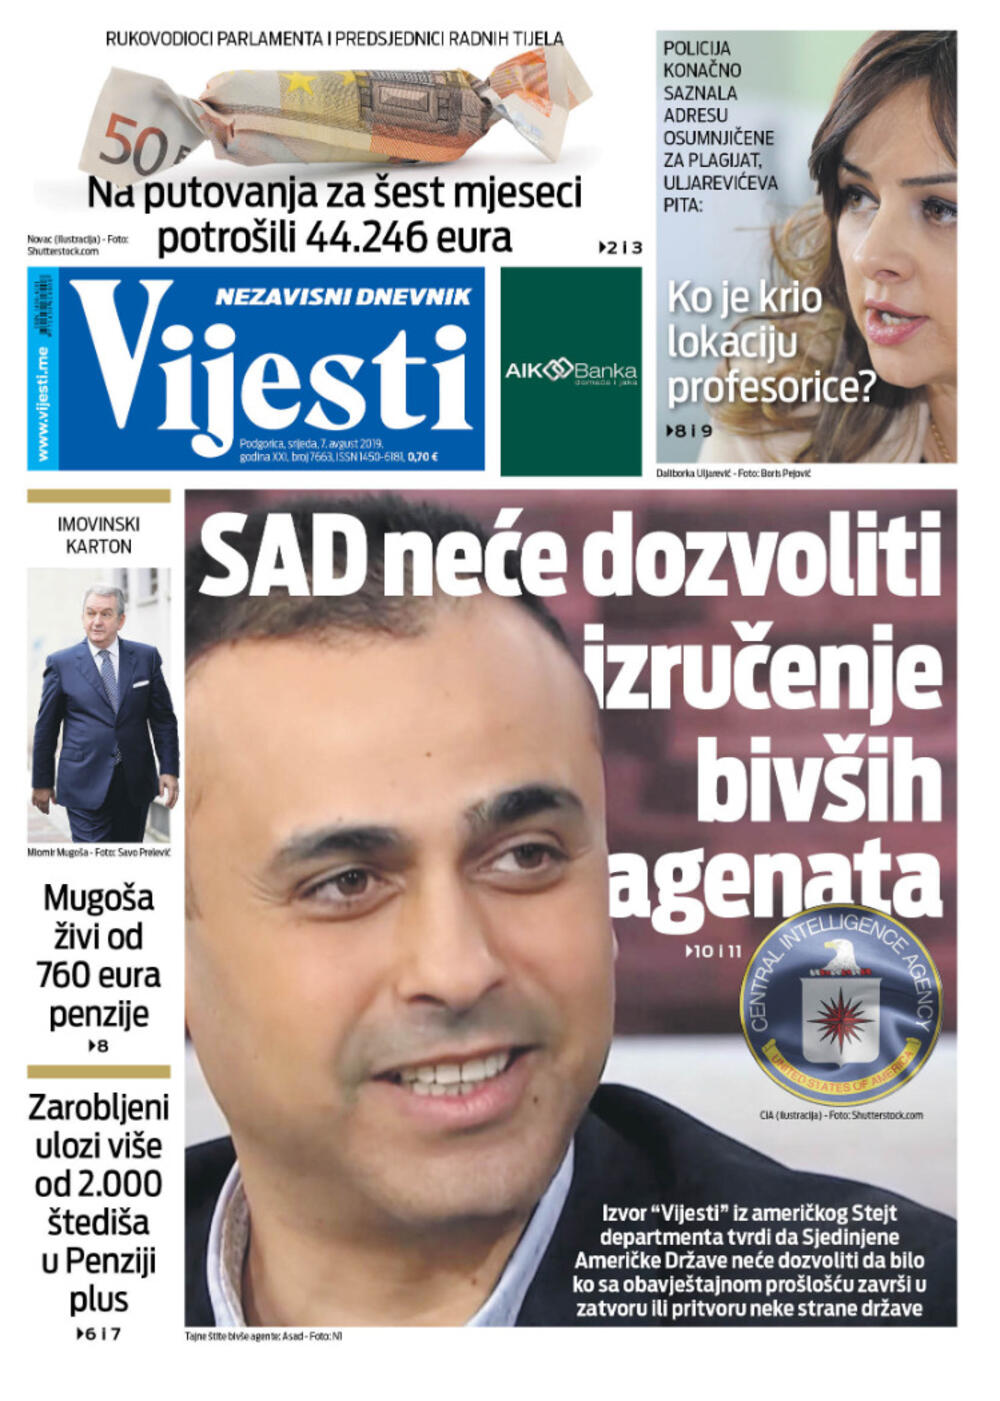 Naslovna strana "Vijesti" za 7. avgust